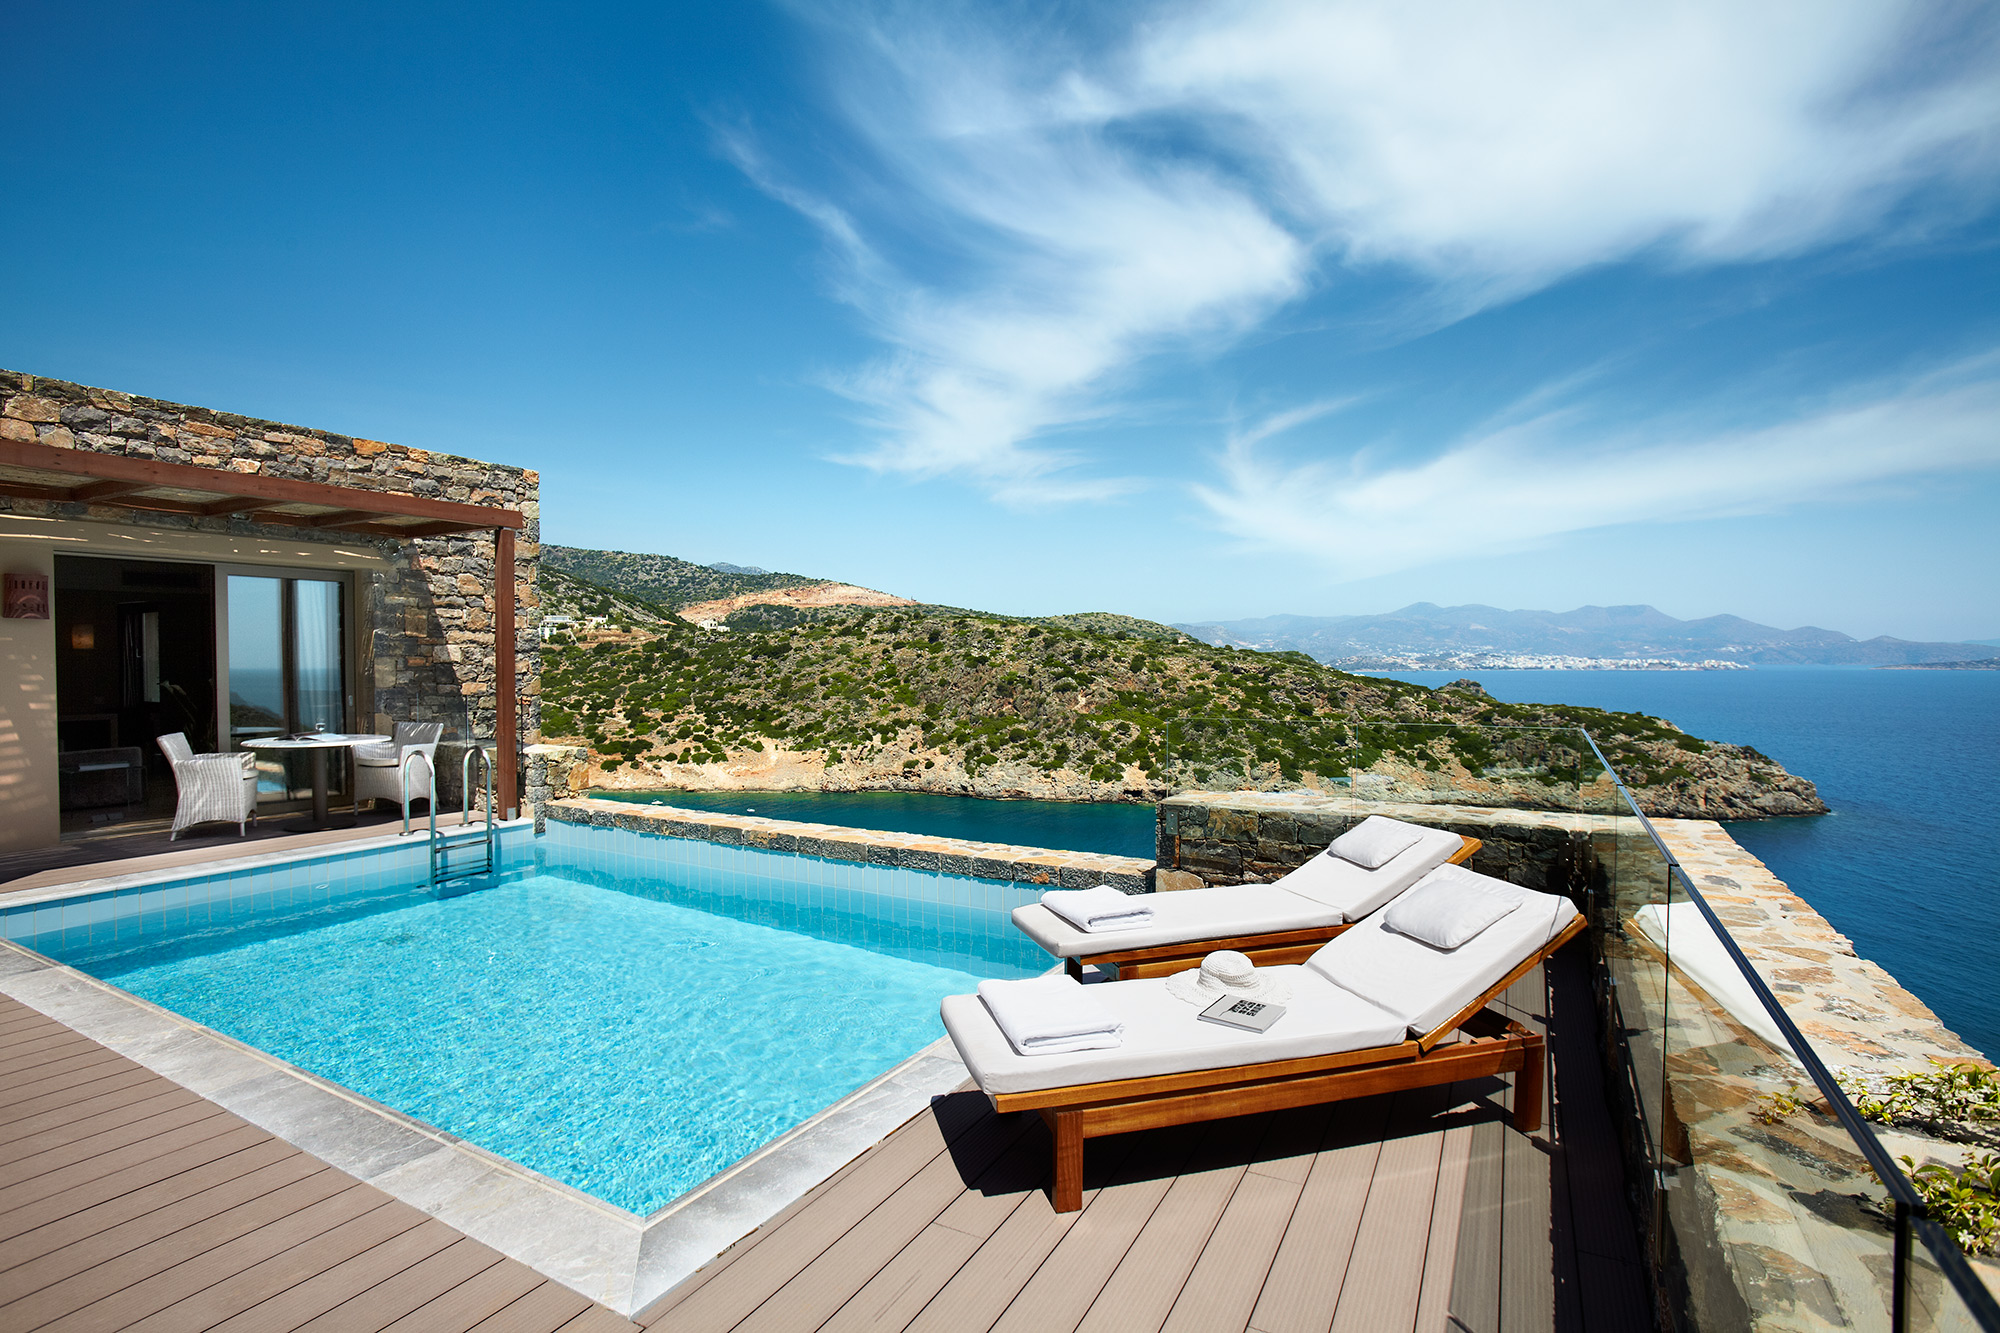 Private ebooker life. Daios Cove Luxury Resort Villas 5. Вилла на острове Крит. Вилла на берегу Средиземного моря Италии. Остров Крит виллы у моря.